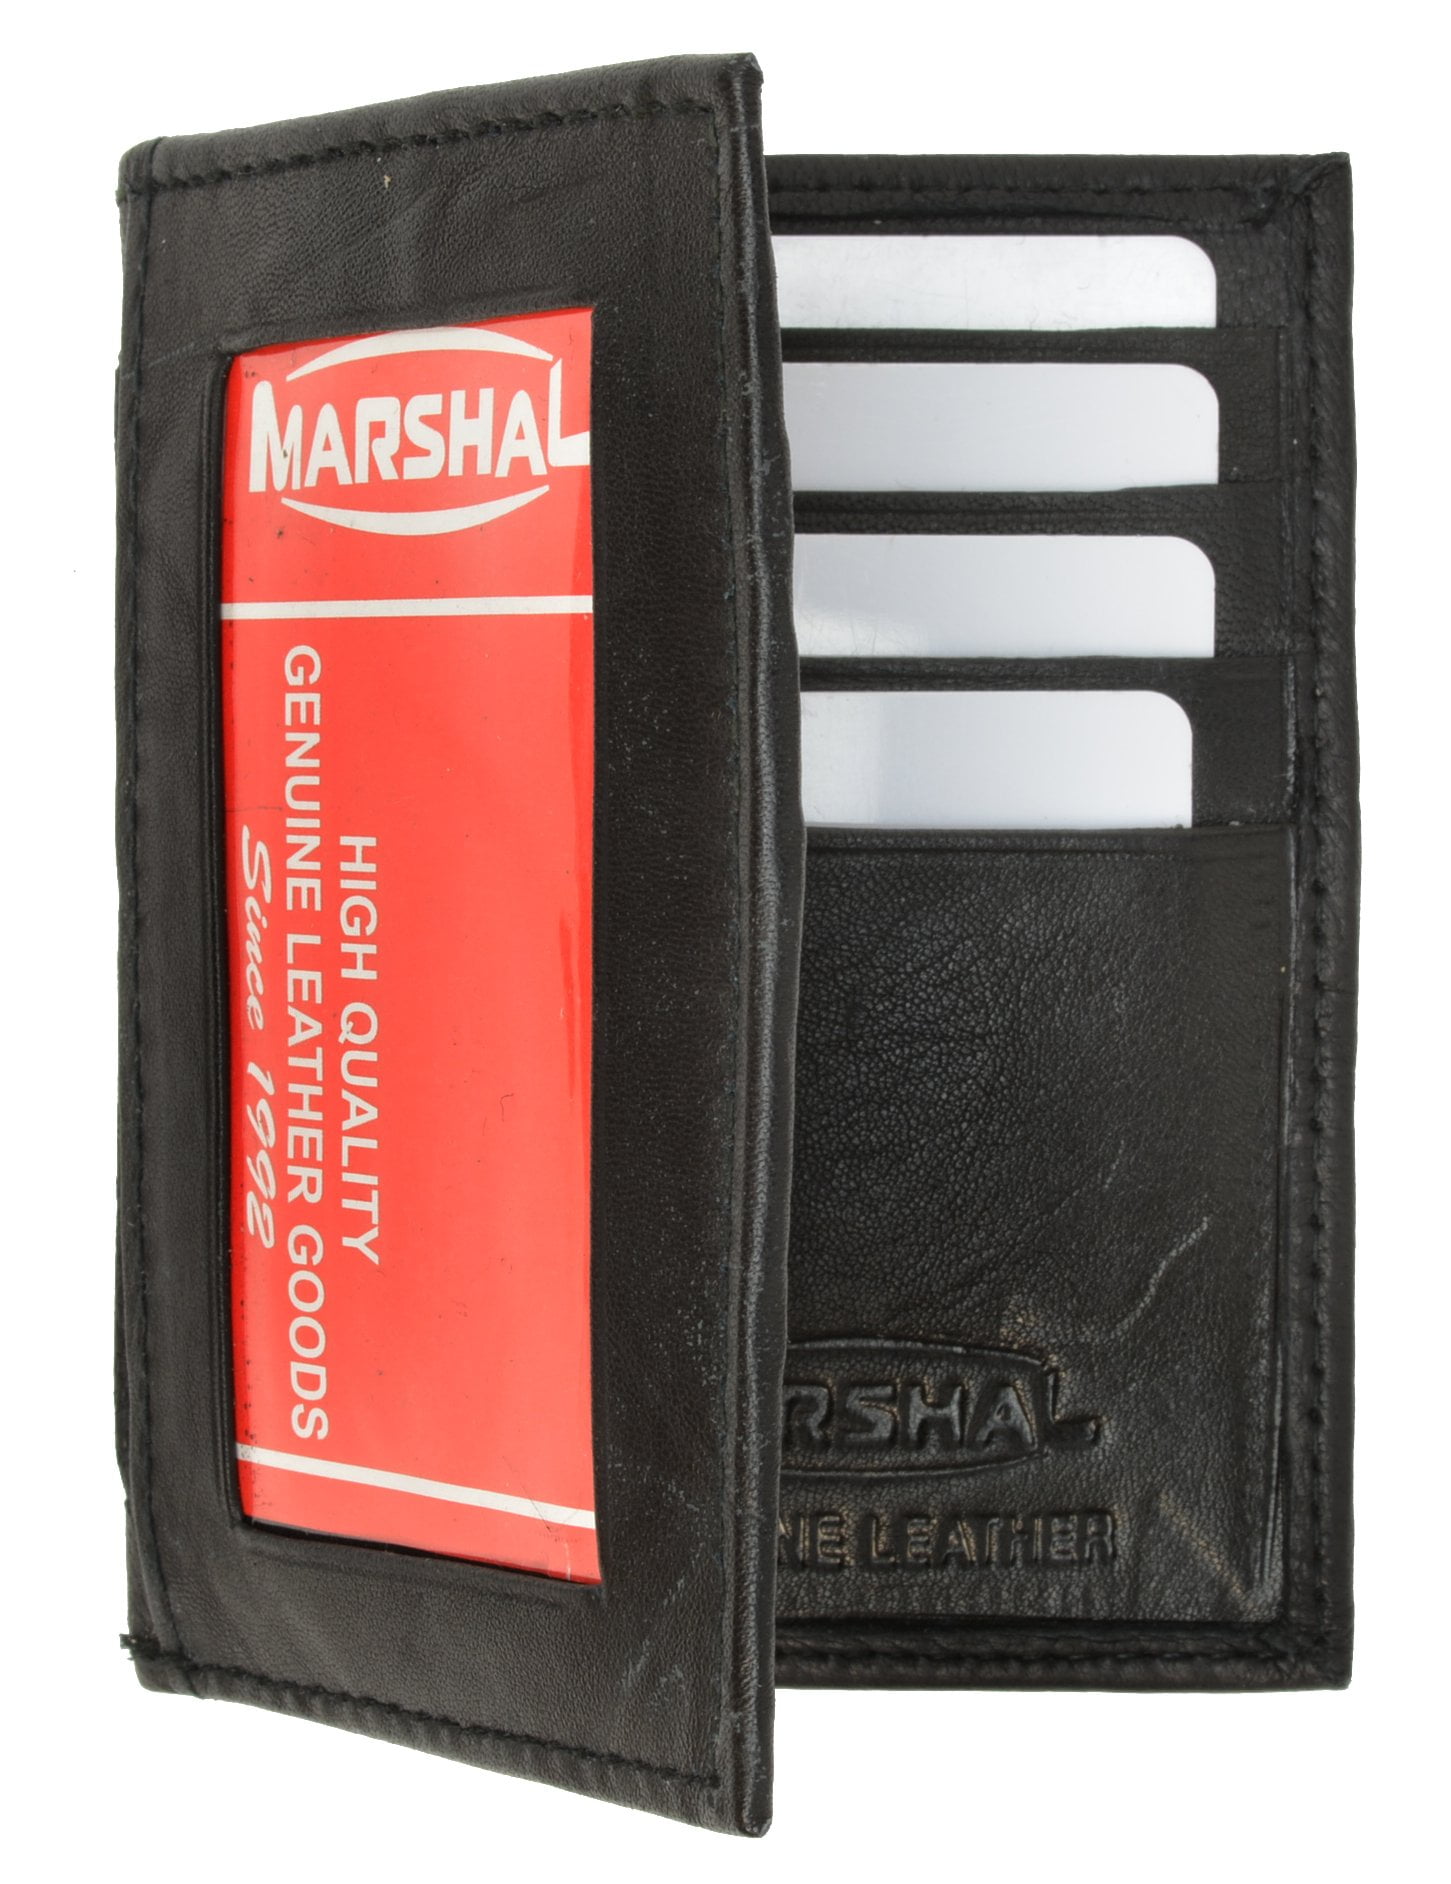 Mens Slim Bifold Black Leather Credit Card Holder Style ID Mini Wallet Thin New